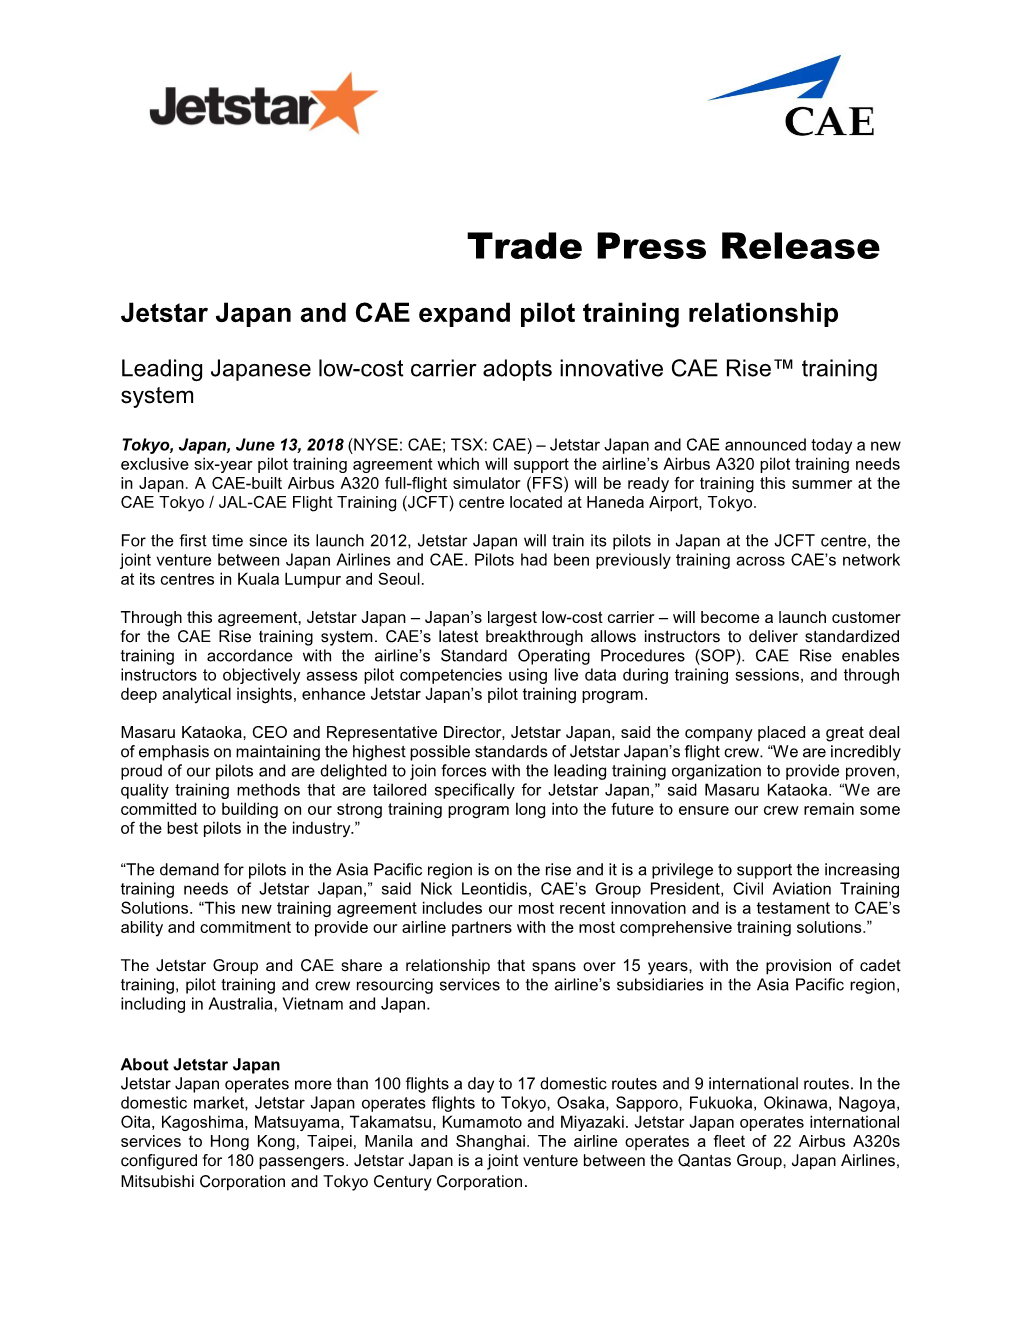 Jetstar Japan and CAE Expand Pilot Training Relationship